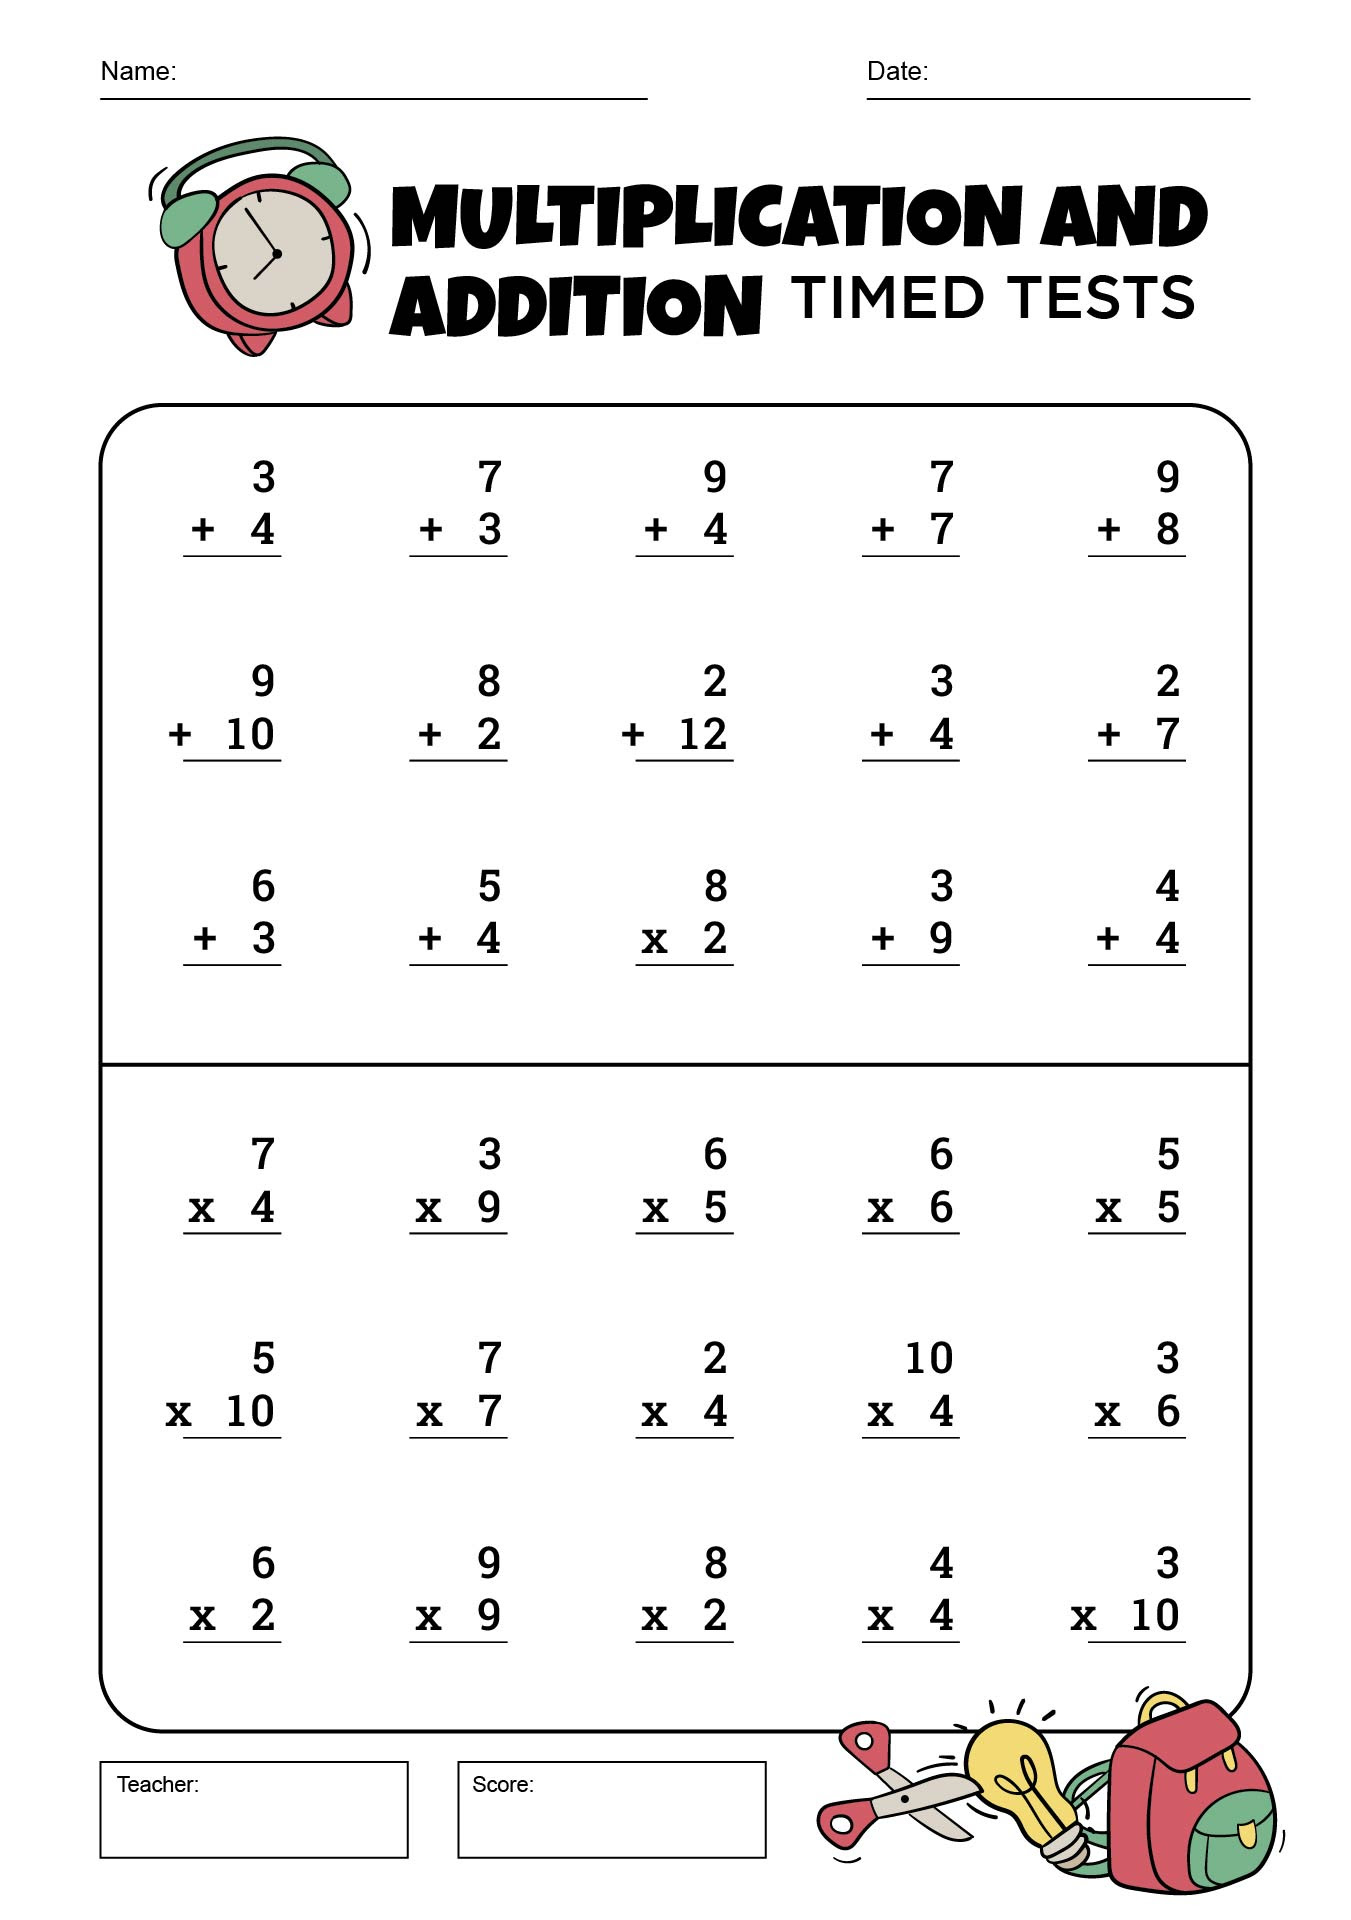 multiplication-worksheets-5th-grade-100-problems-printable-multiplication-flash-cards